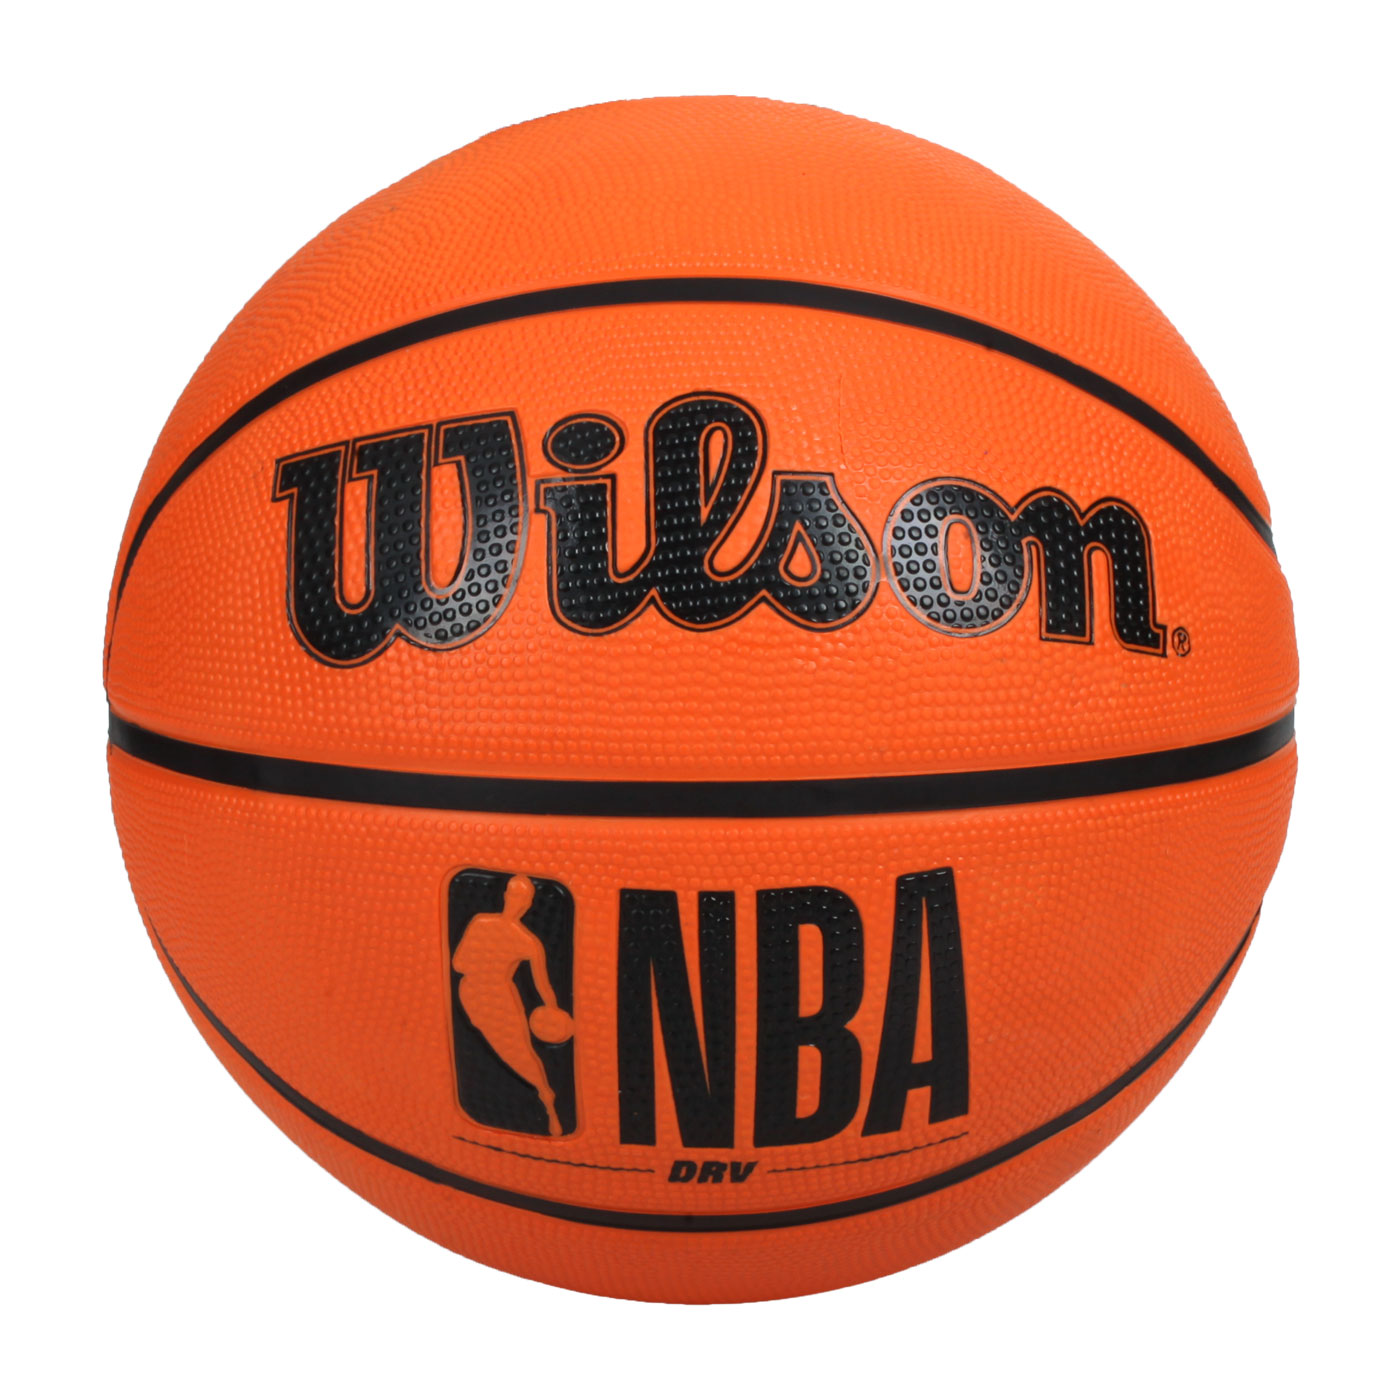 WILSON NBA DRV系列橡膠籃球#7 WTB9300XB07 - 橘黑